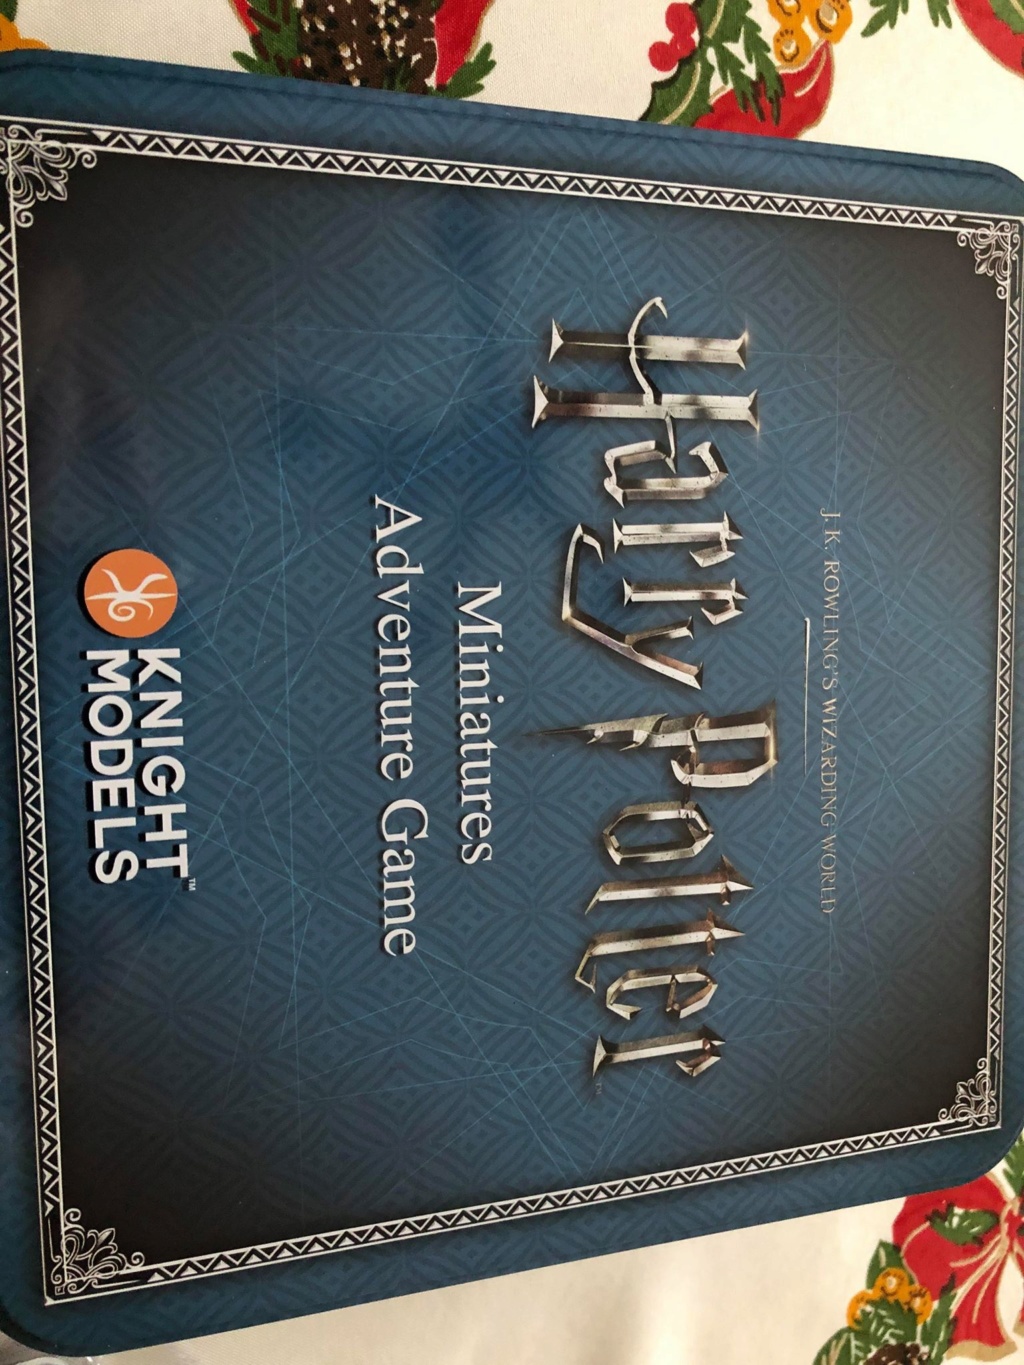 Harry Potter Miniatures Game arrive !  80703310